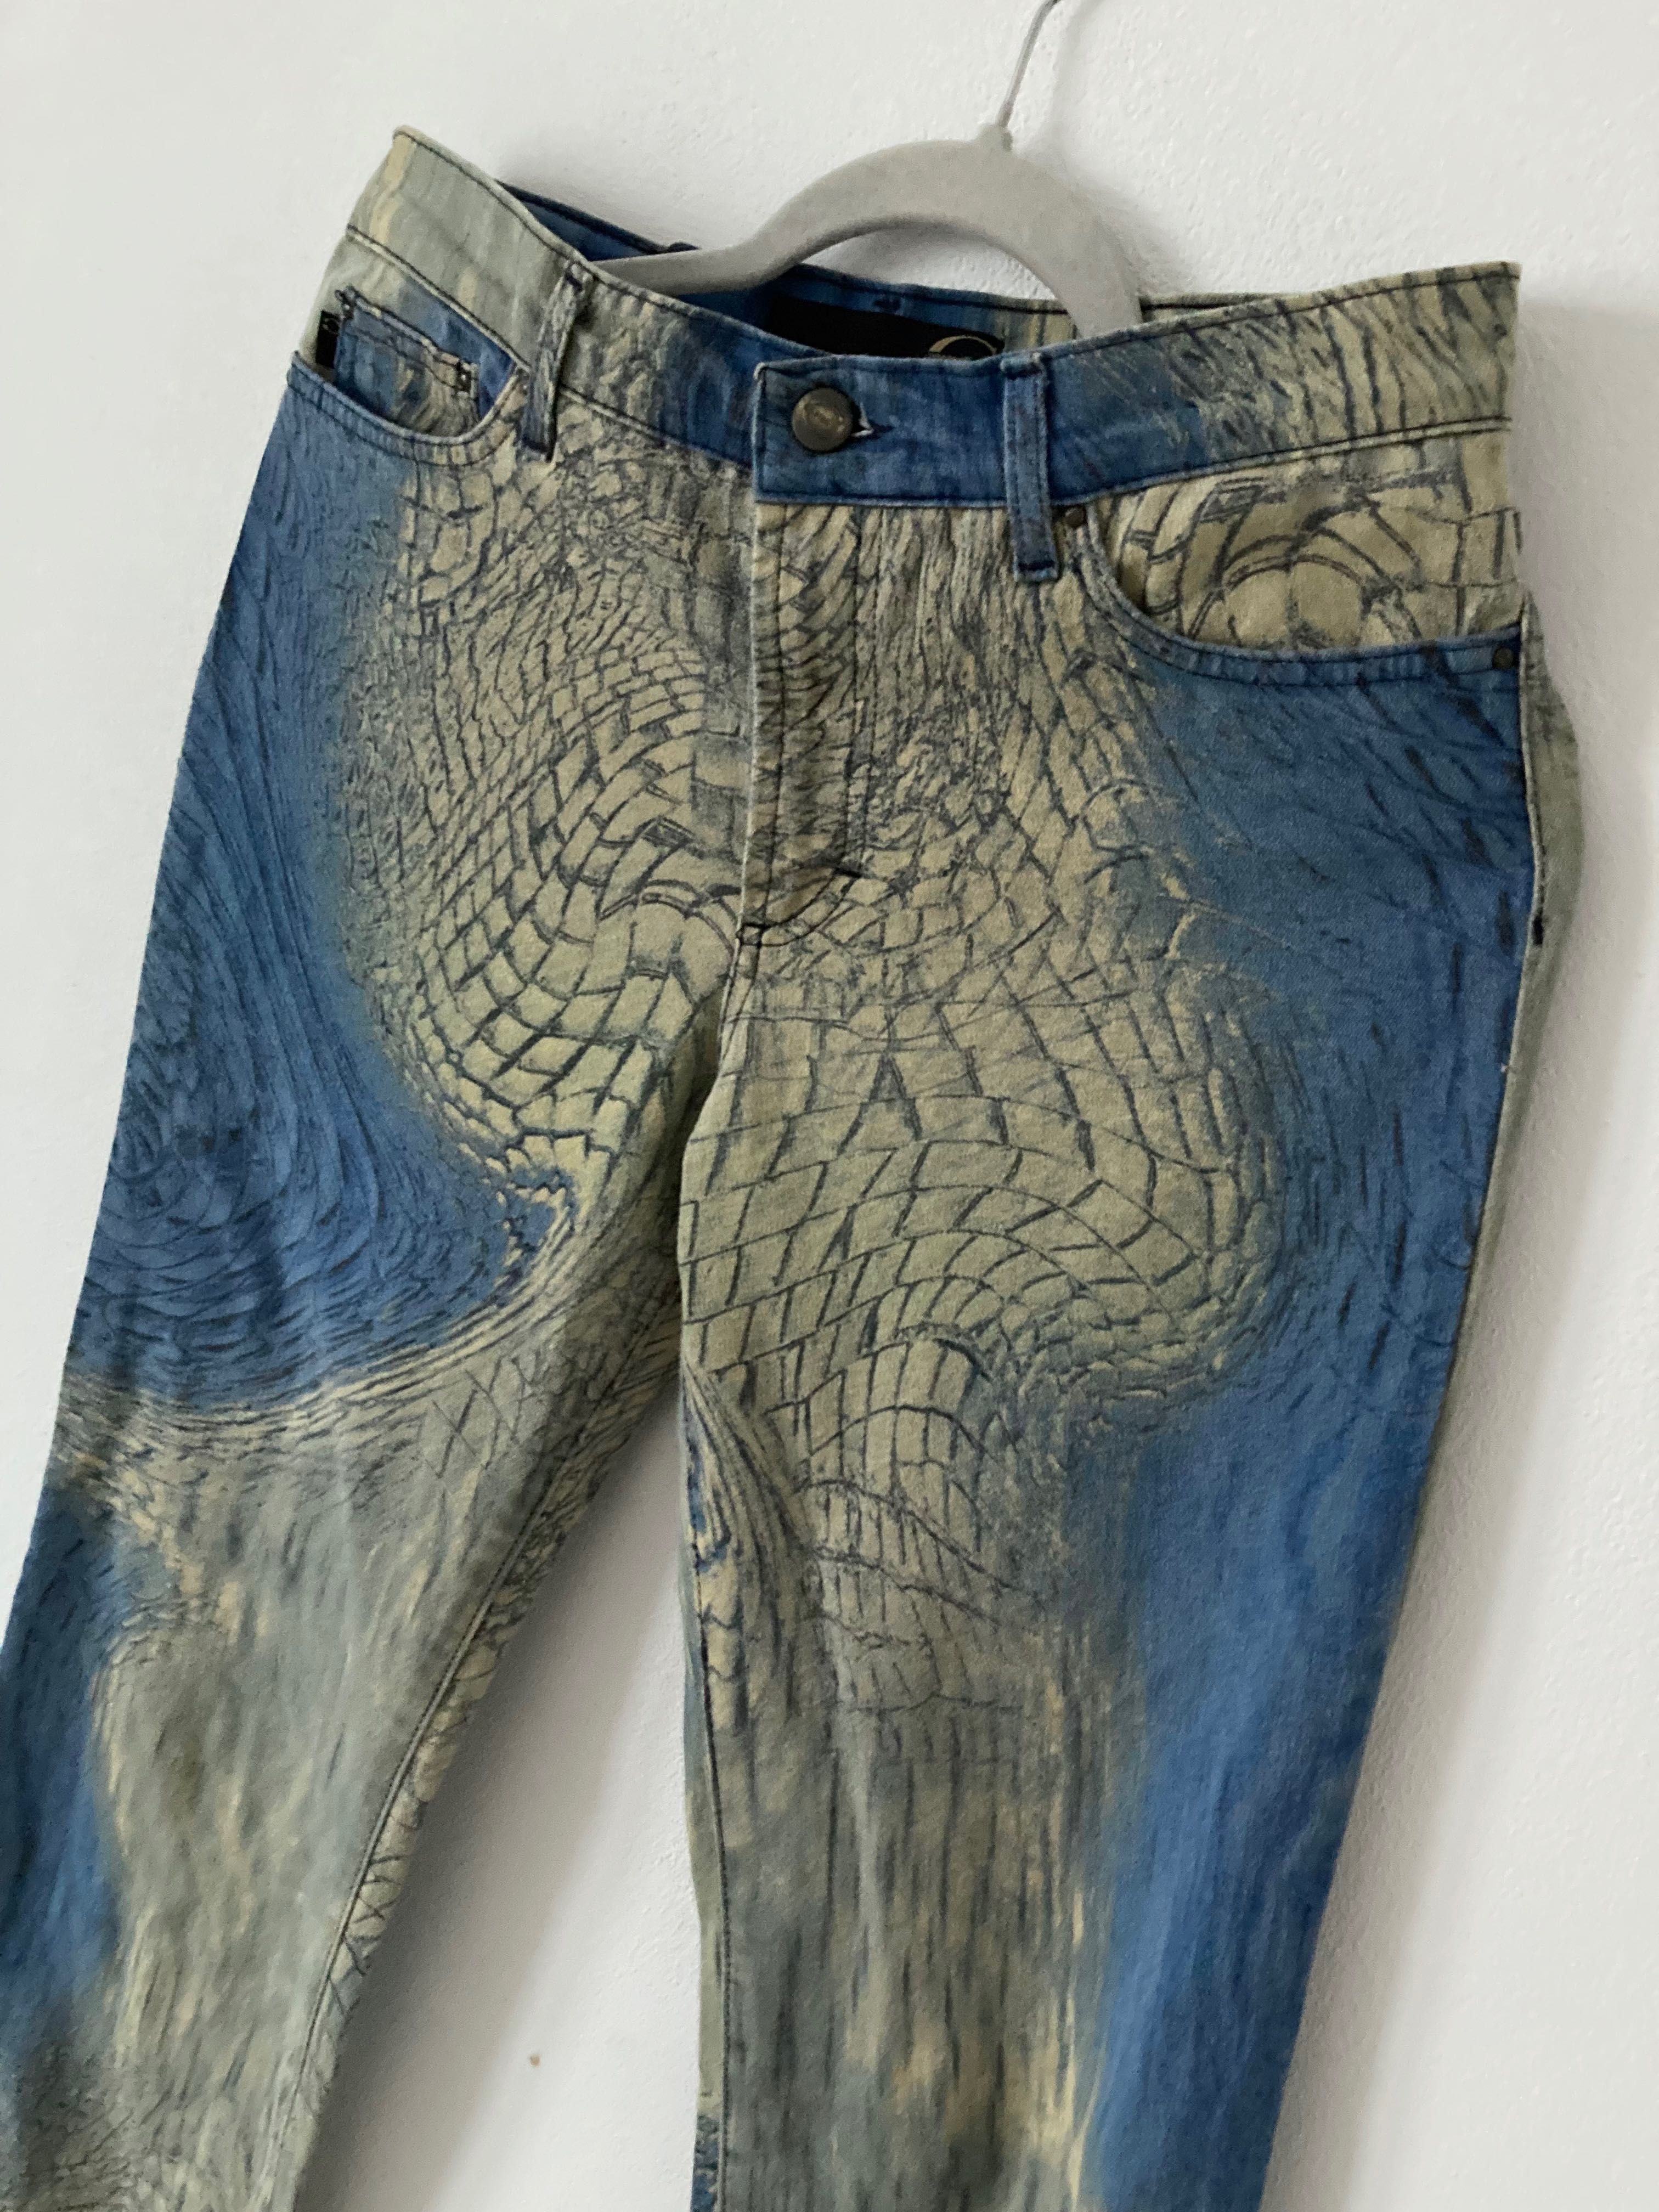 Cavalli new printed pants